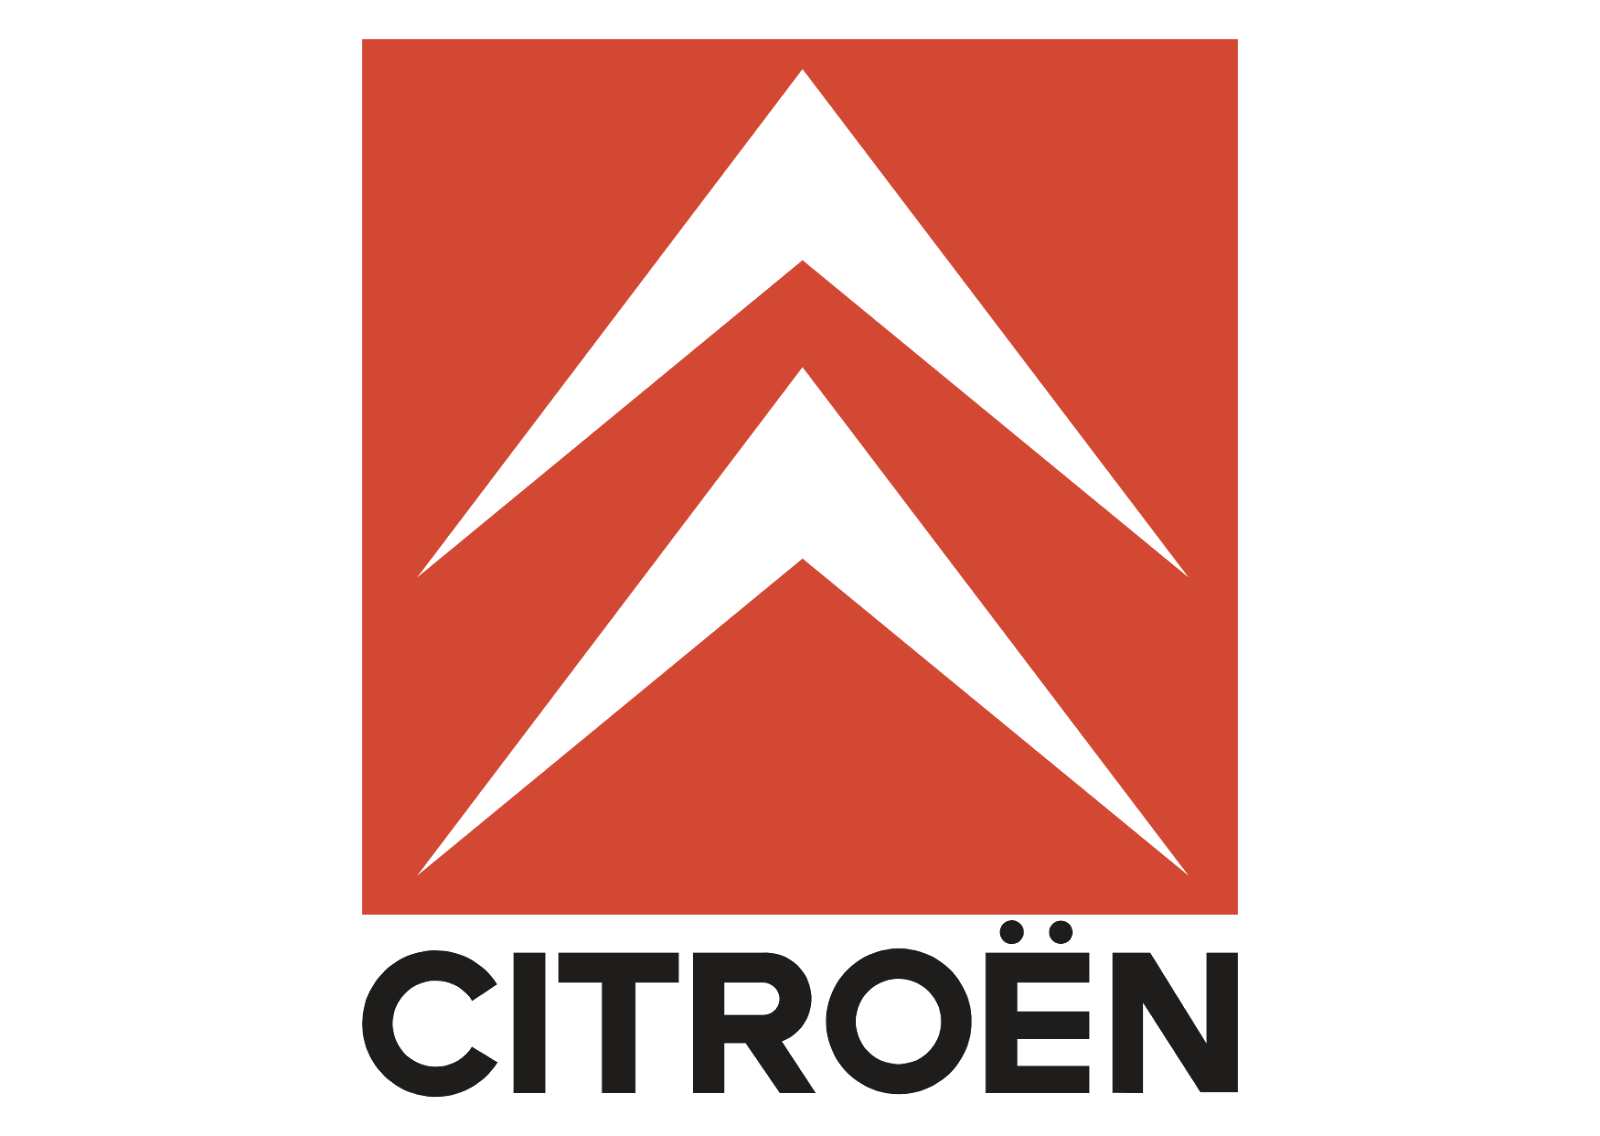 Citroën ancien logo